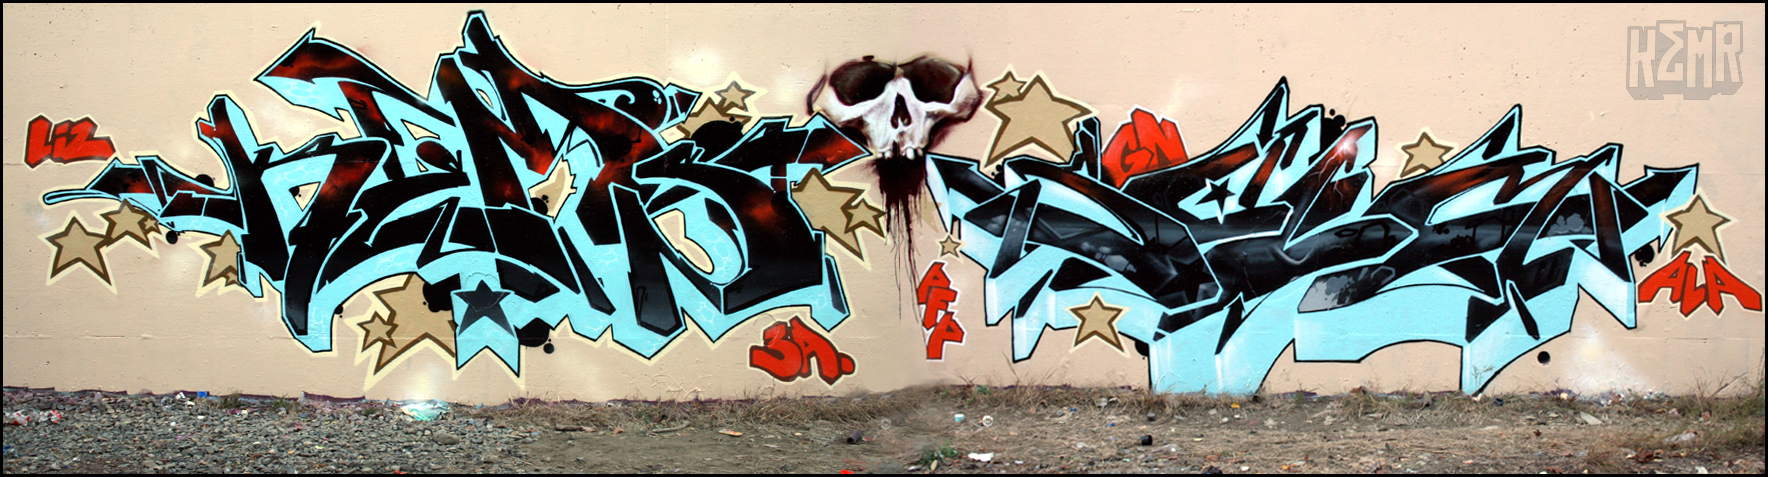 http://www.graffiti.org/soem/ynzvf_skull_1.jpg